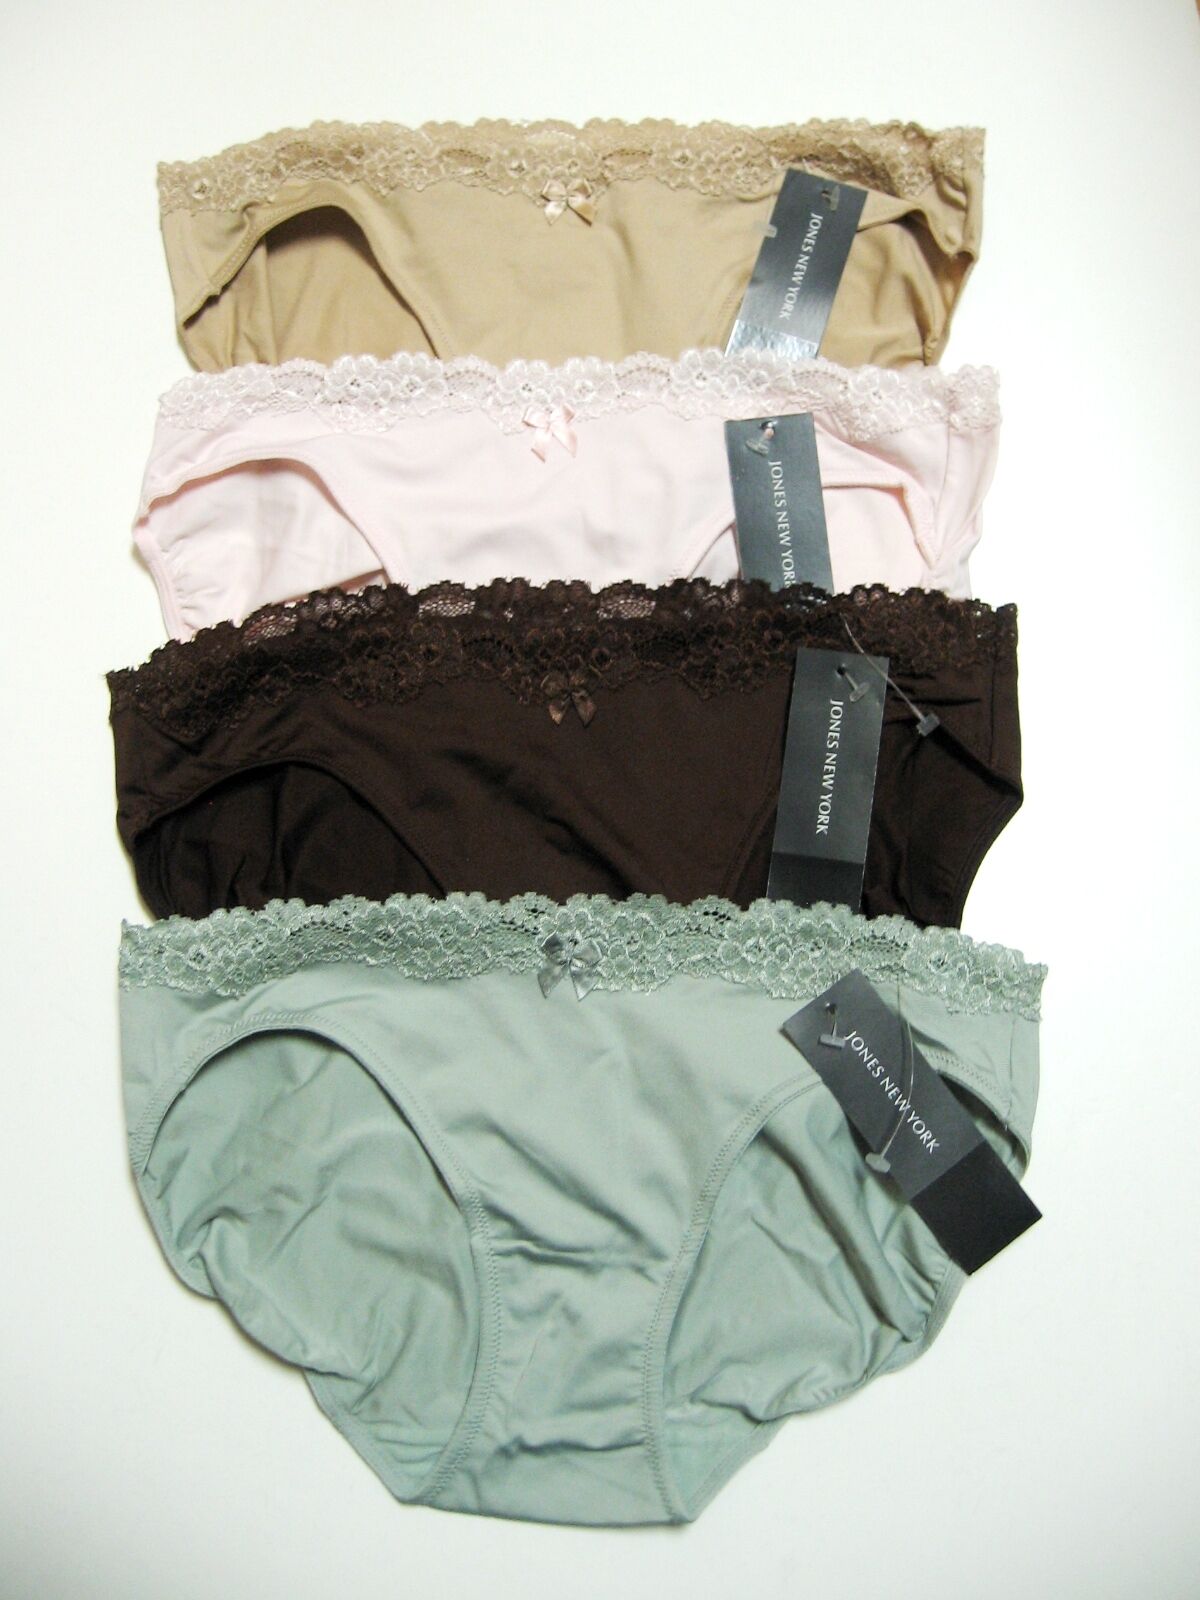 www.prominentresults.com :A208B Jones New York NEW Women's Lace Waistband Silky Microfiber Bikini 610142 PR NWT